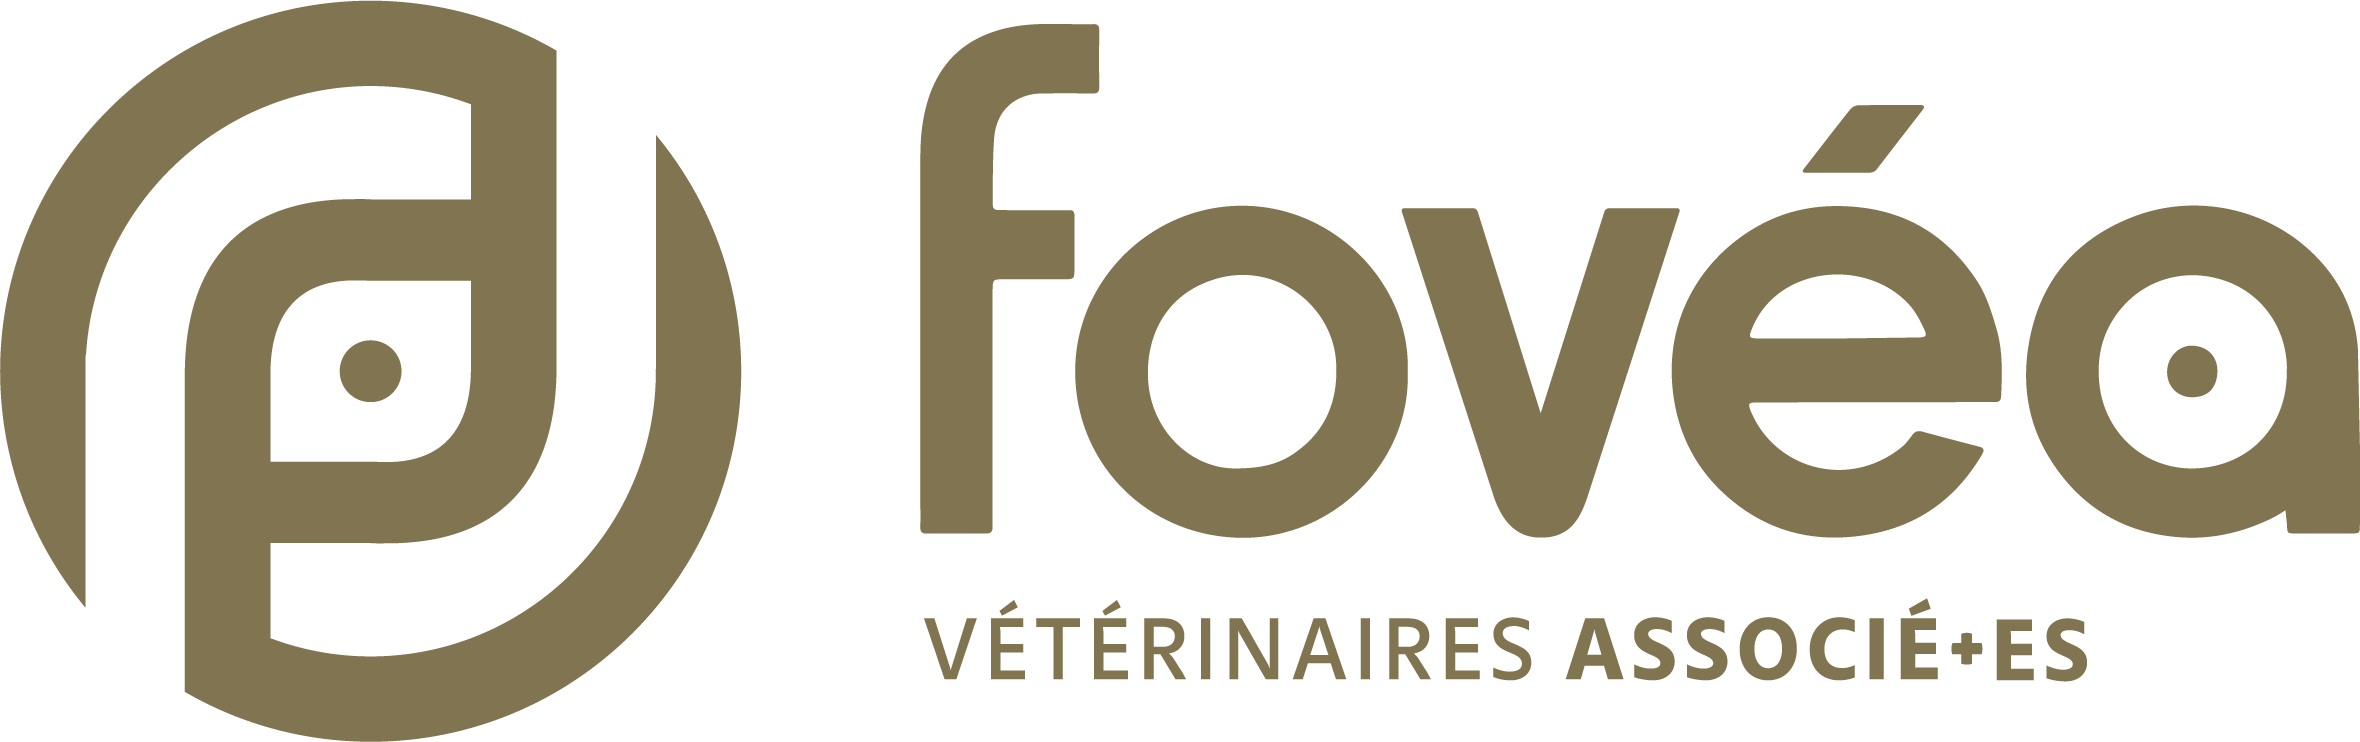 Fovéa - Vétérinaires associés+es